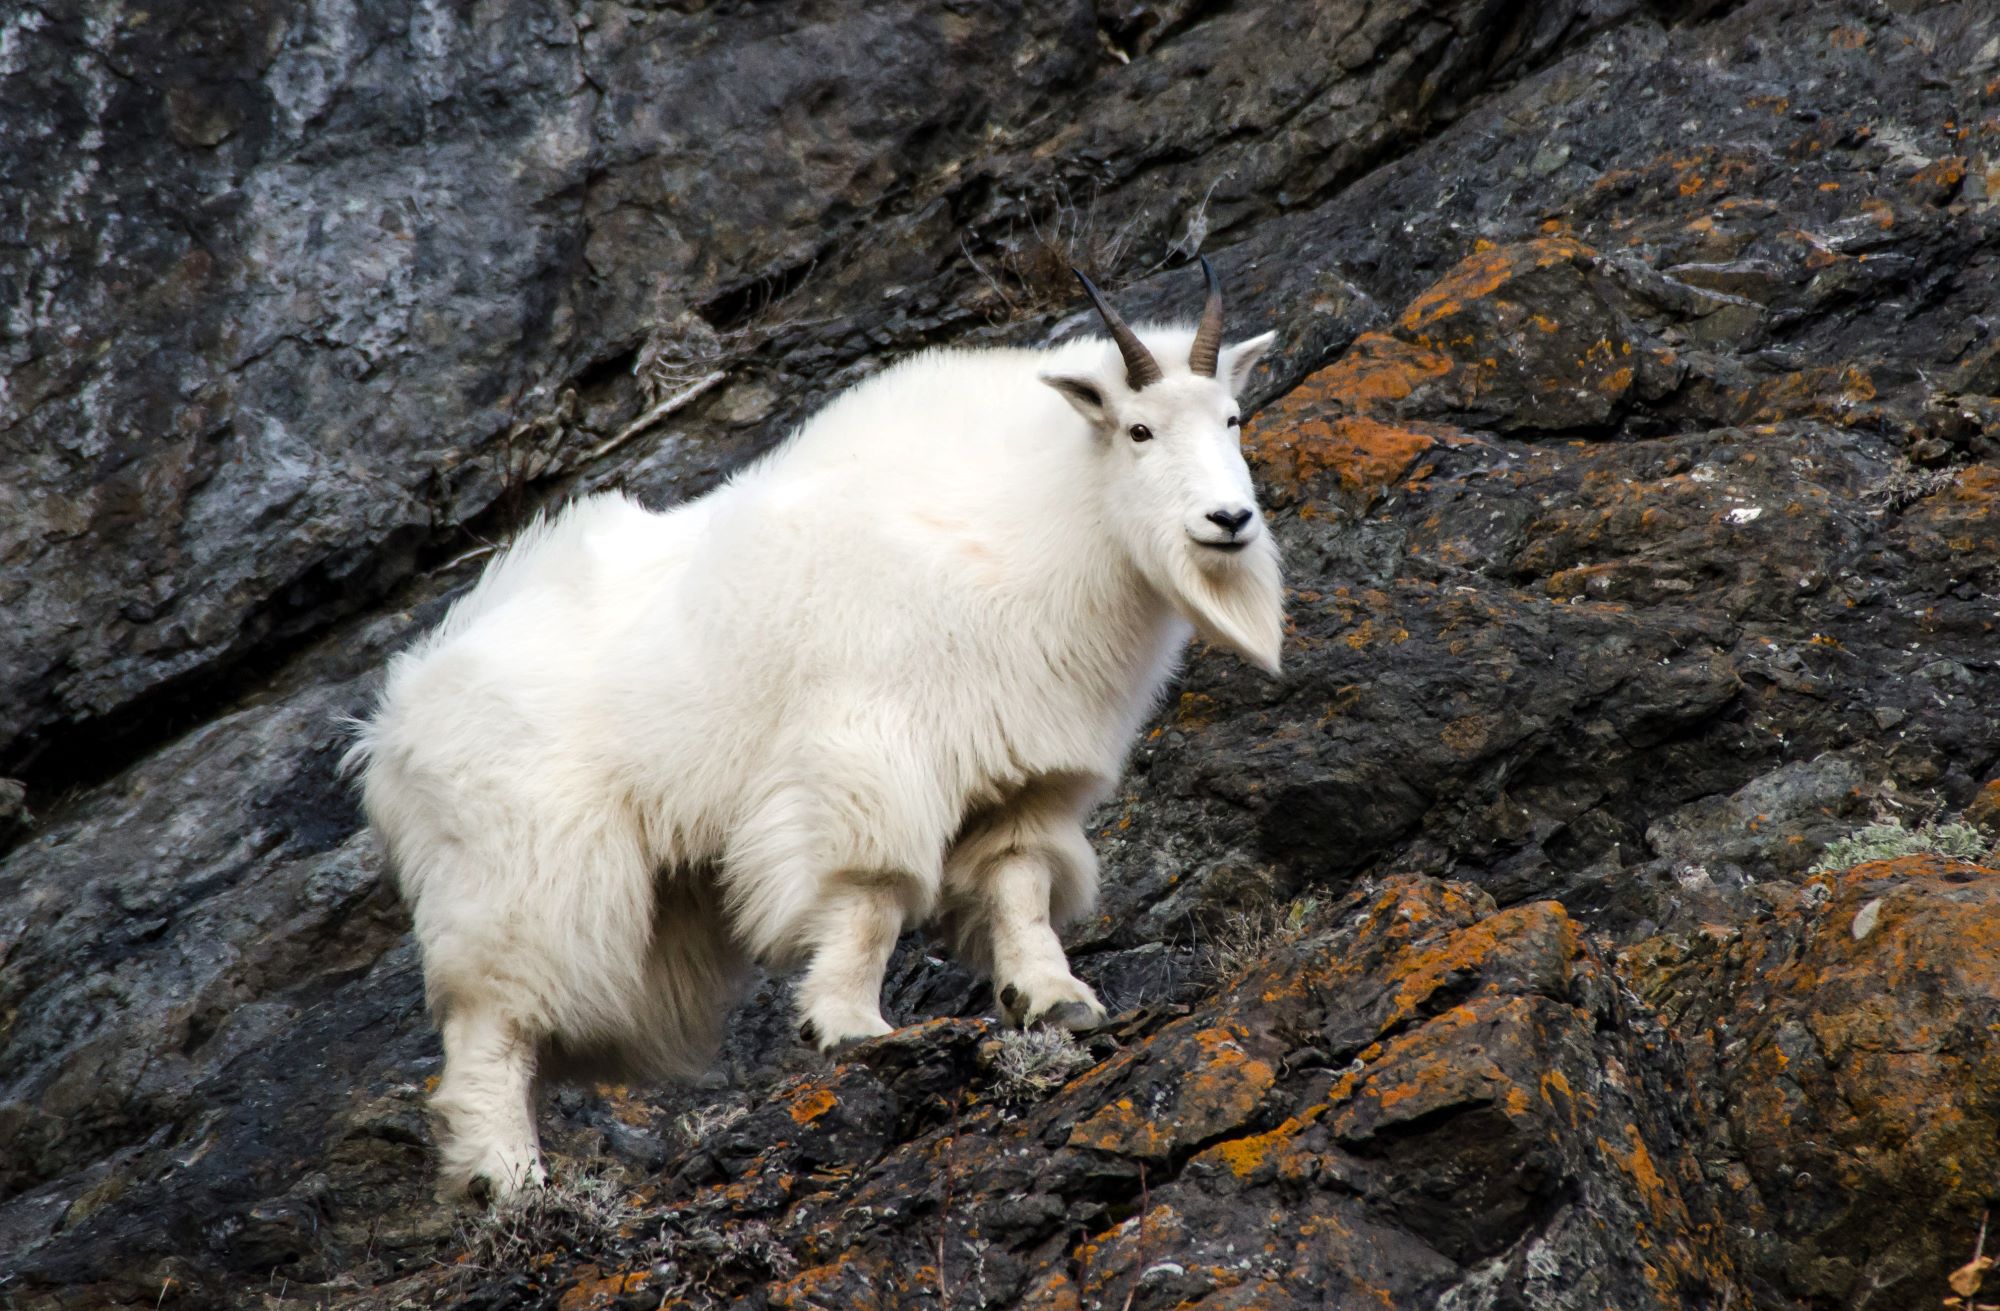 A mountain goat.